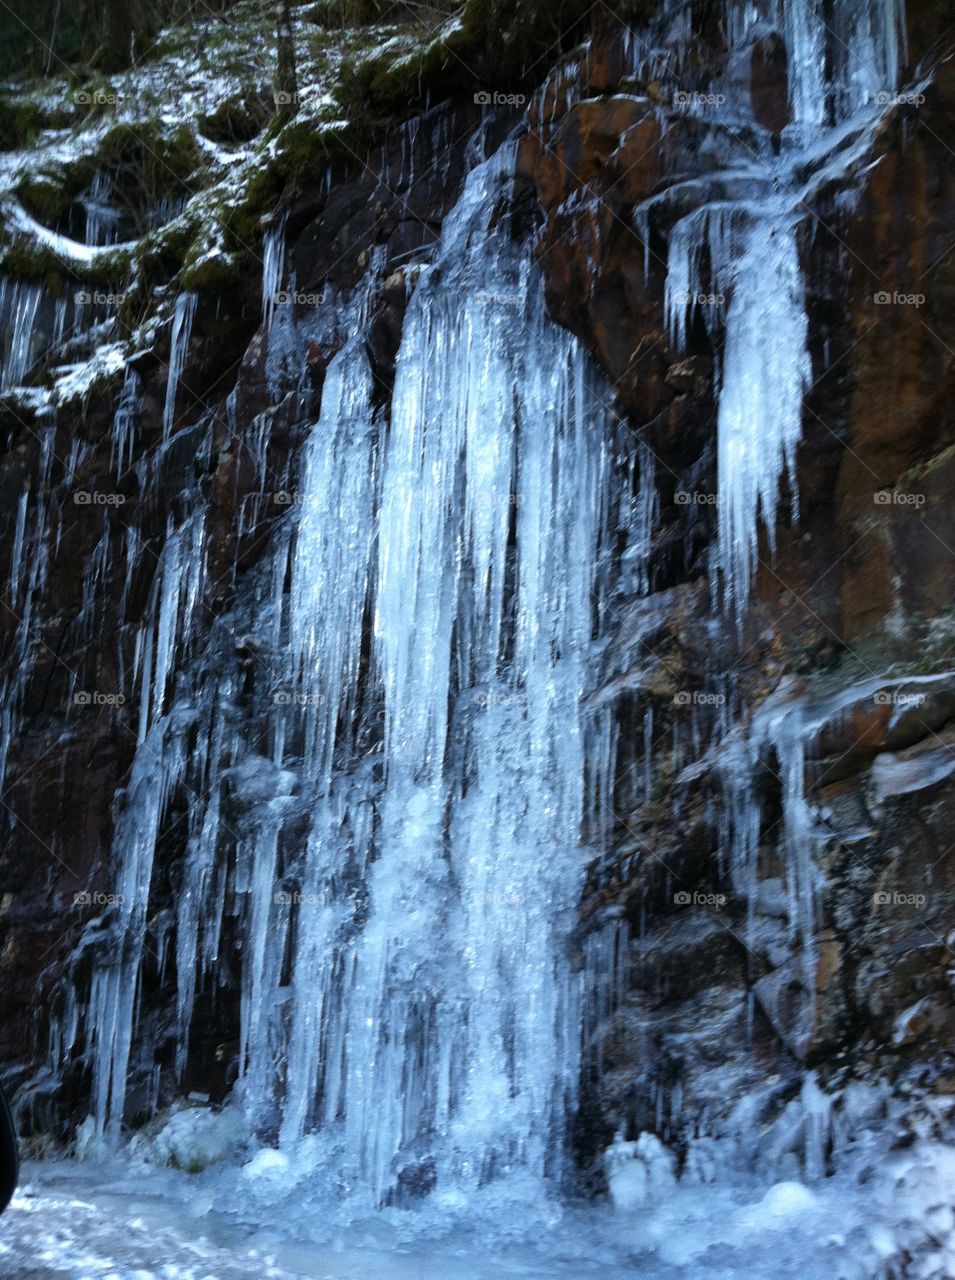 Frozen. Frozen precipitation in Great Smoky Mountains National Park